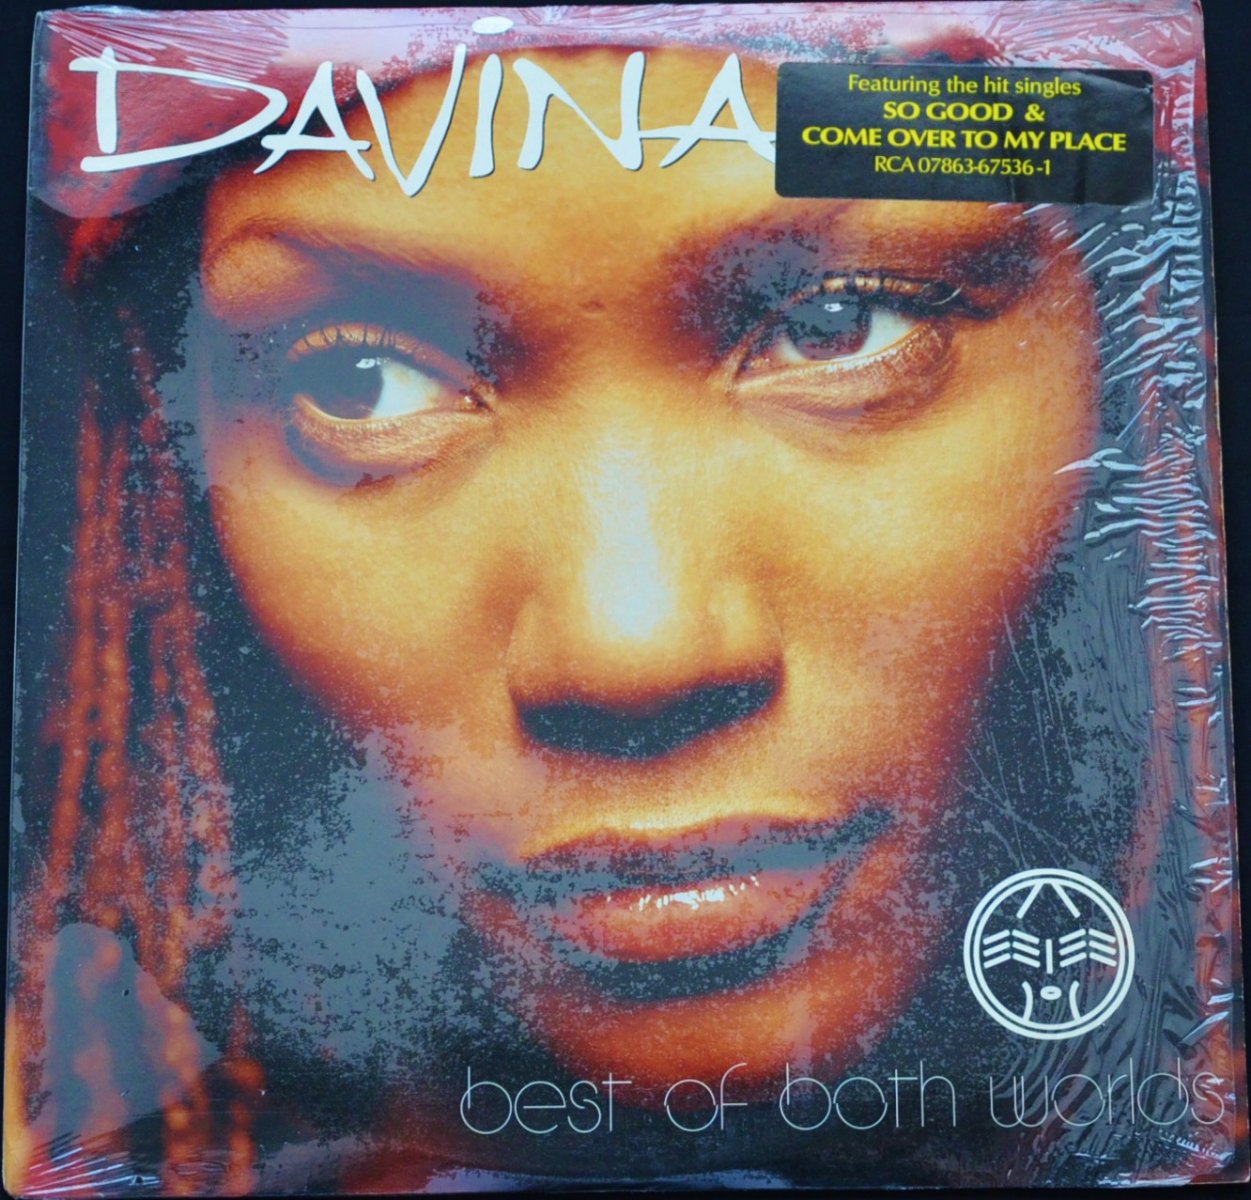 DAVINA / BEST OF BOTH WORLDS (2LP) - HIP TANK RECORDS